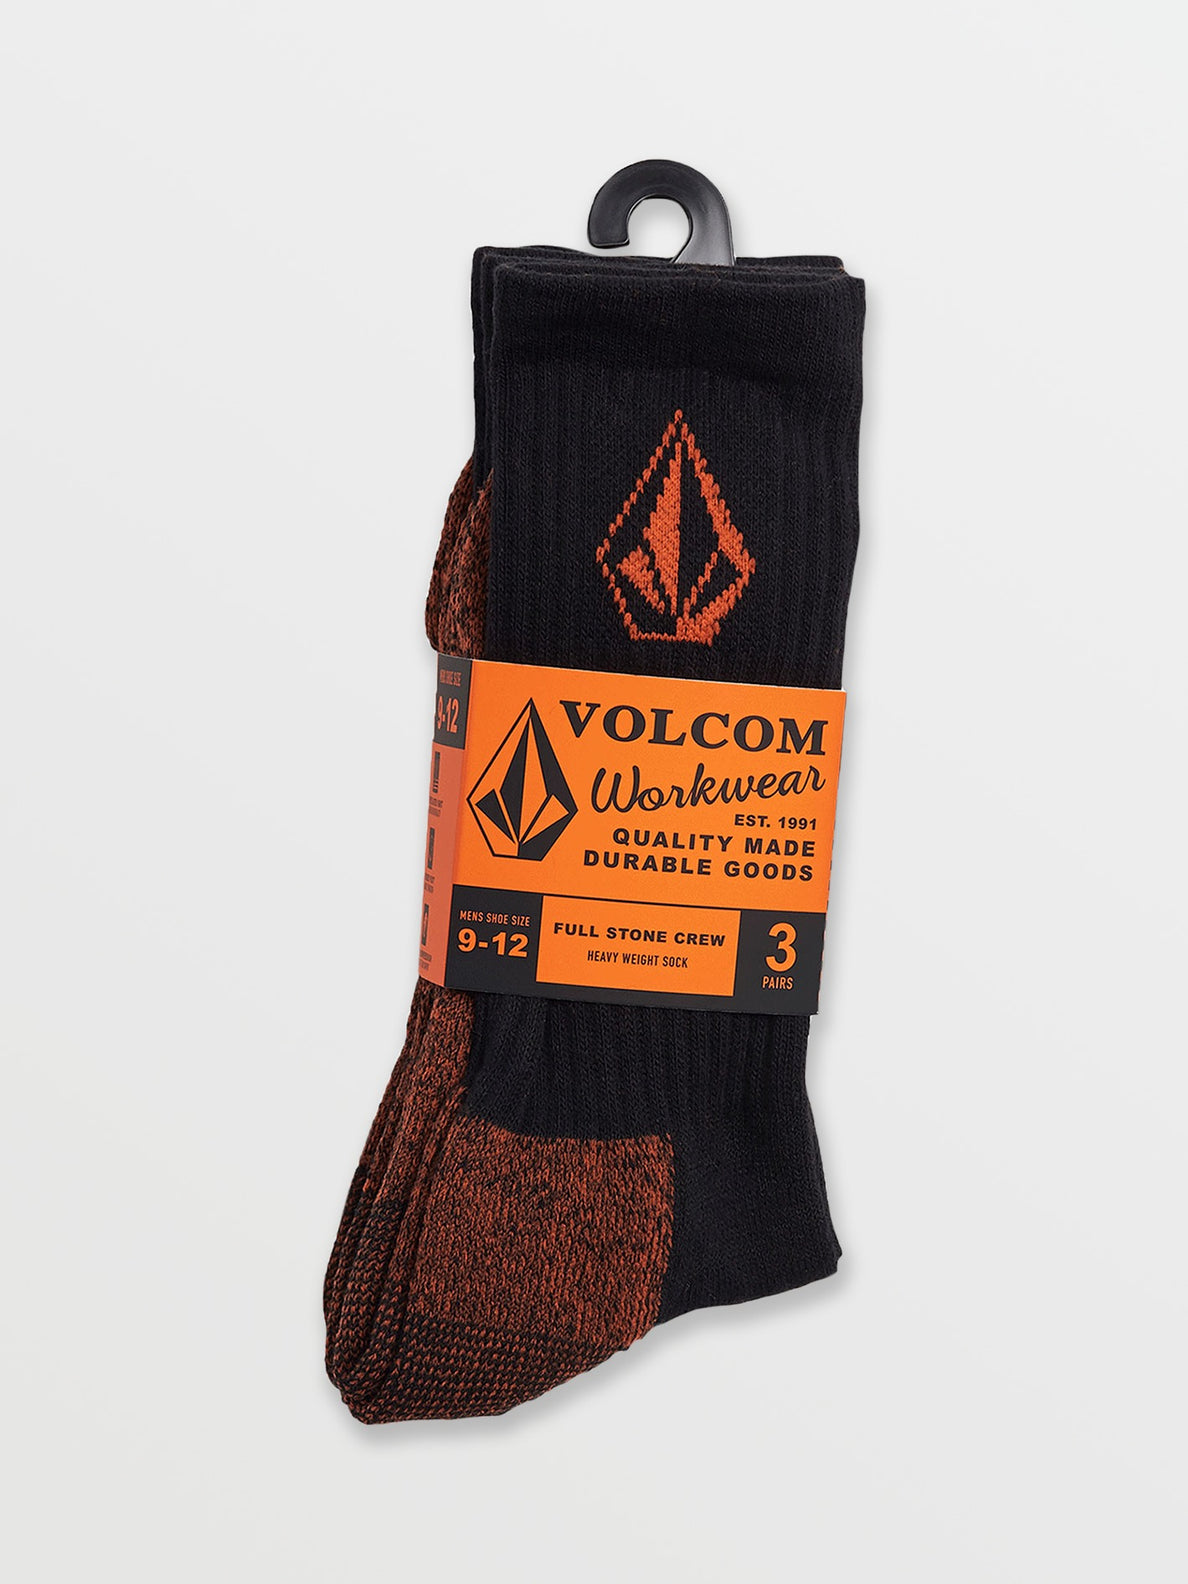 Volcom Workwear Sock 3 Pack - Black